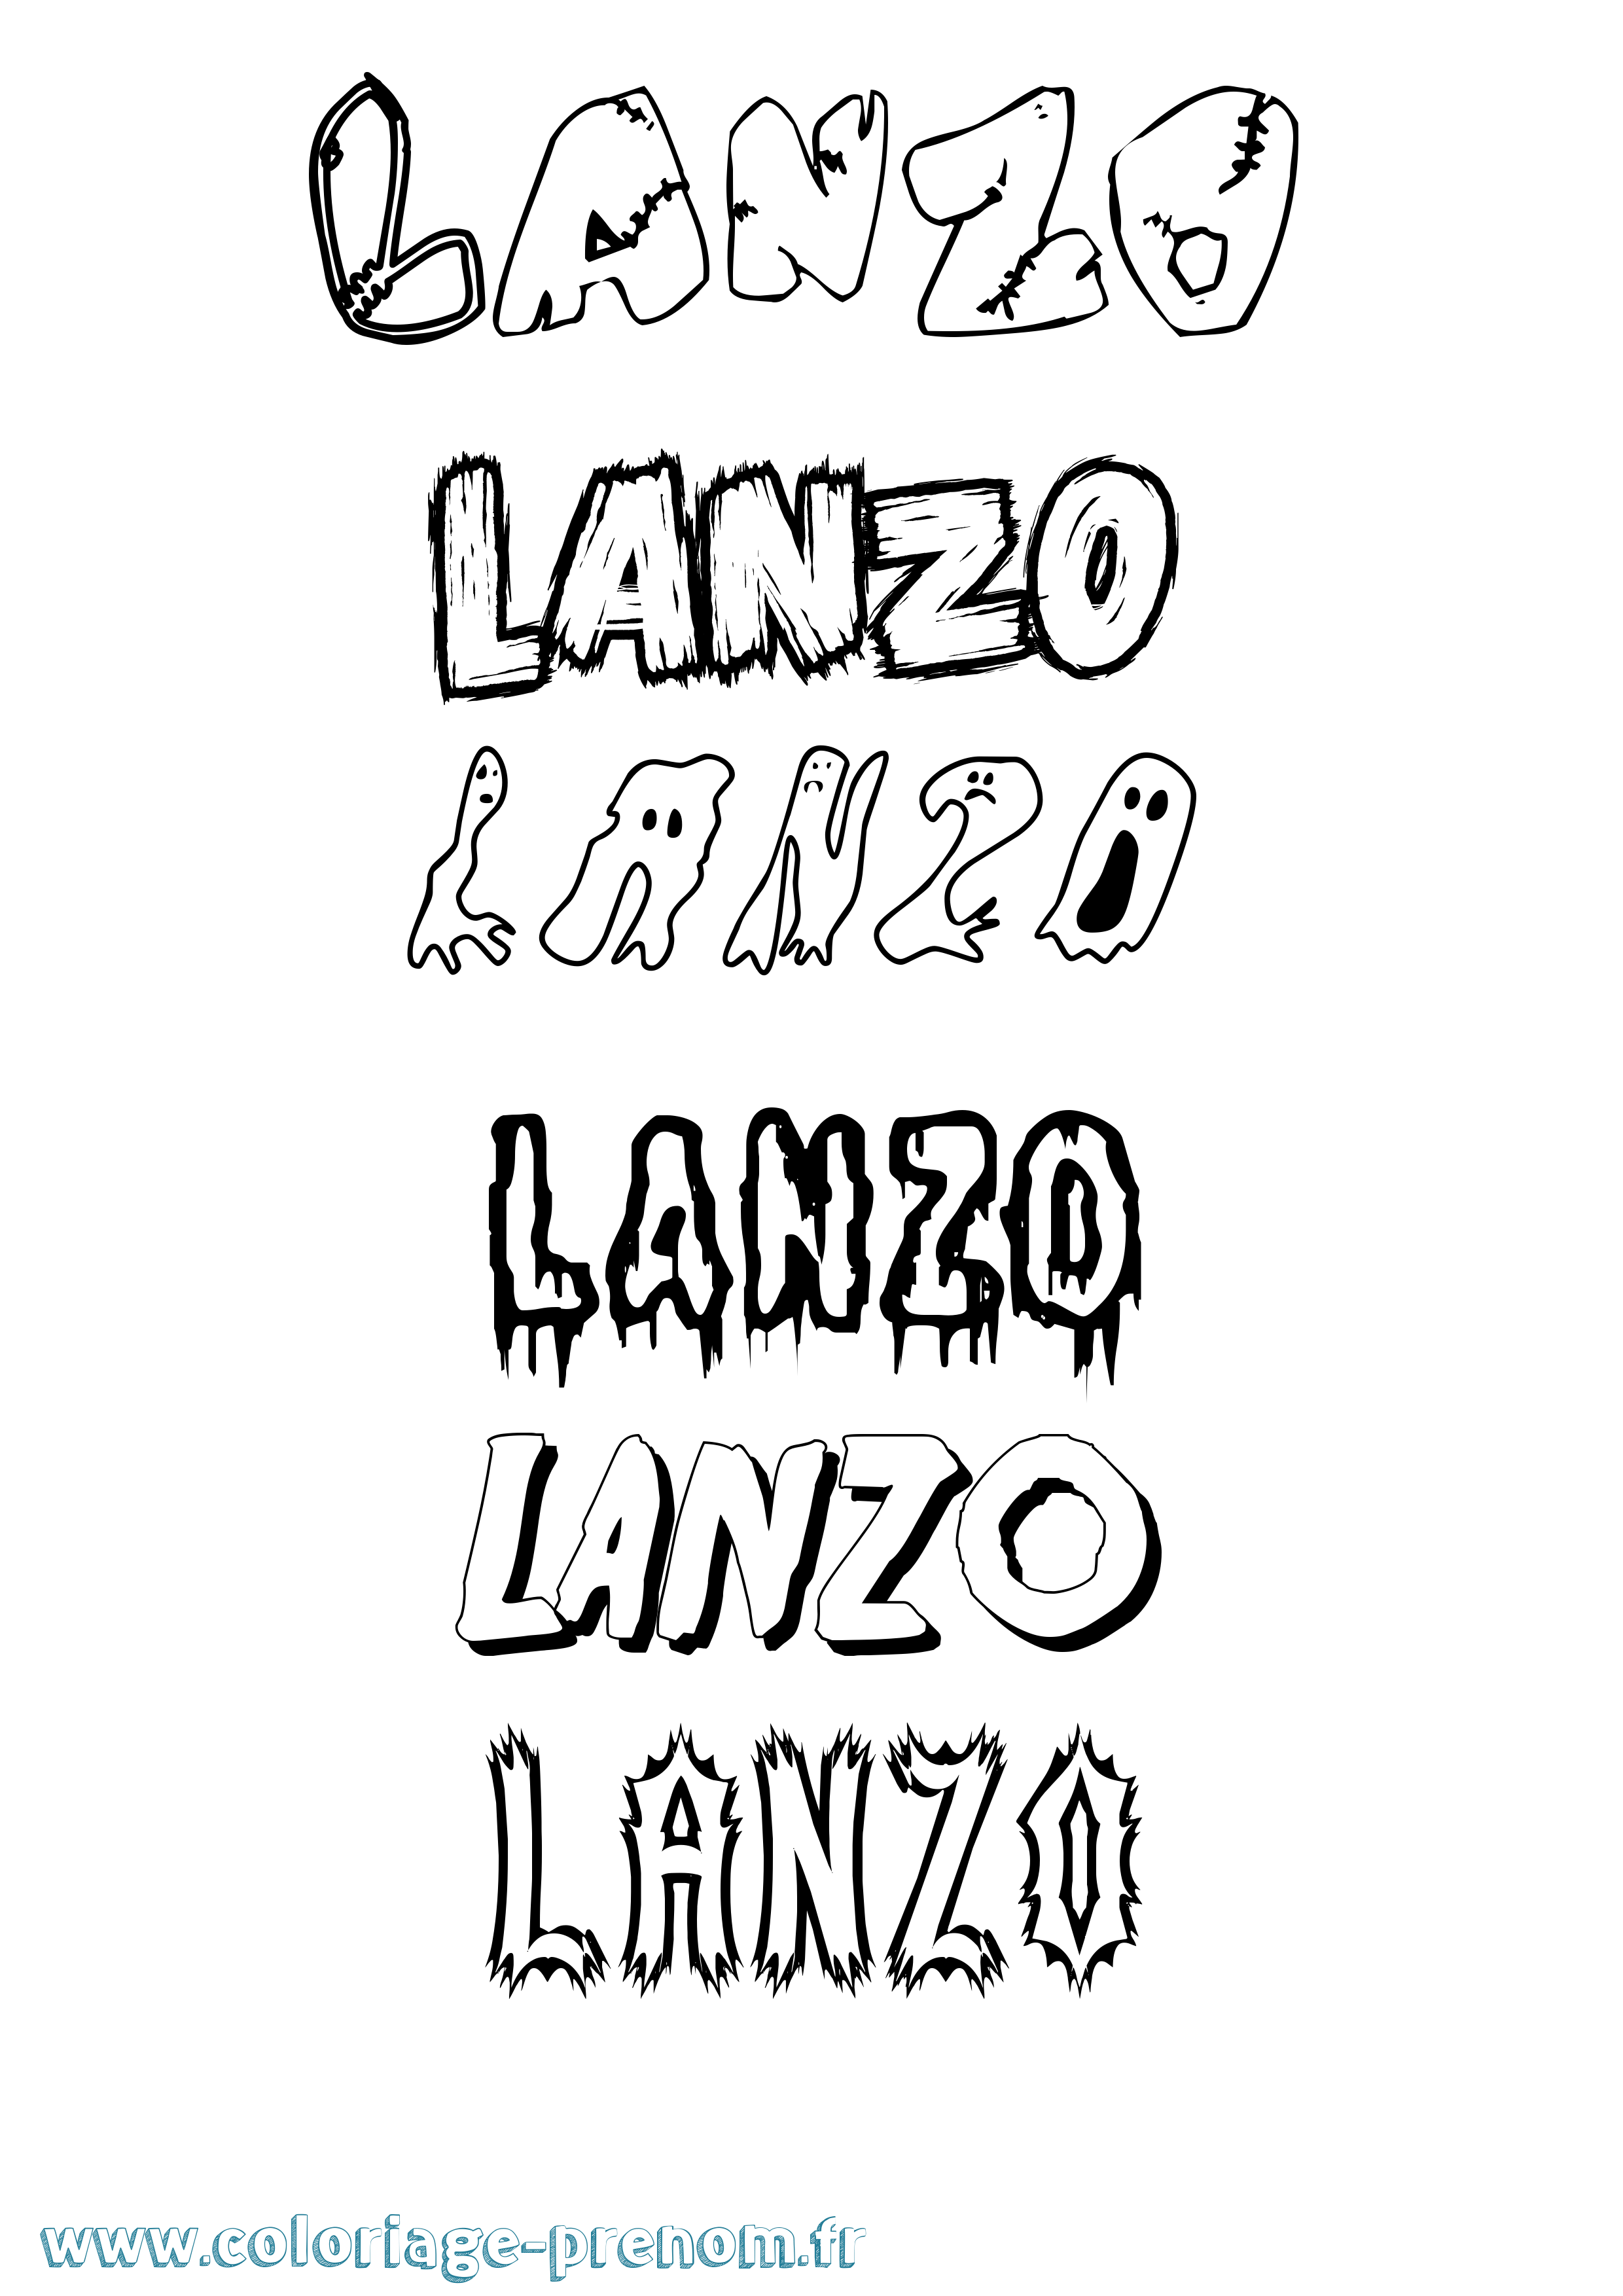 Coloriage prénom Lanzo Frisson